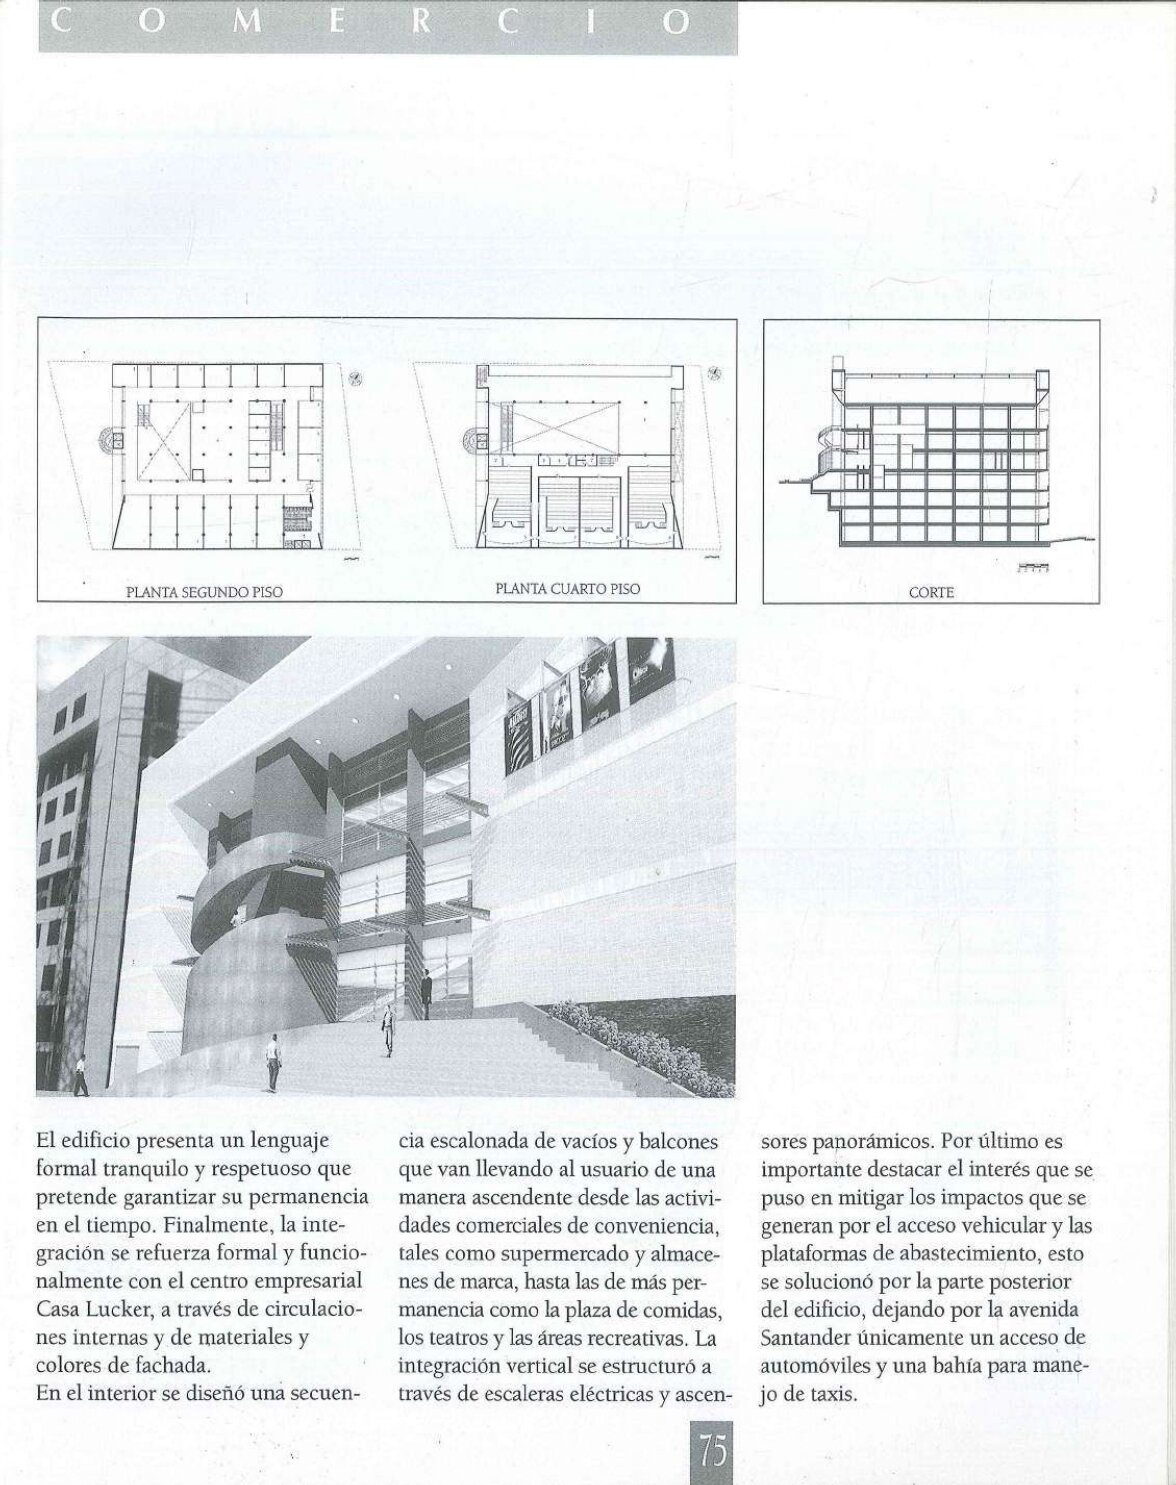 2002_Contexto Urbano- Obra reciente 1995-2002. REVISTA PROA 1_compressed (1)_page-0077.jpg